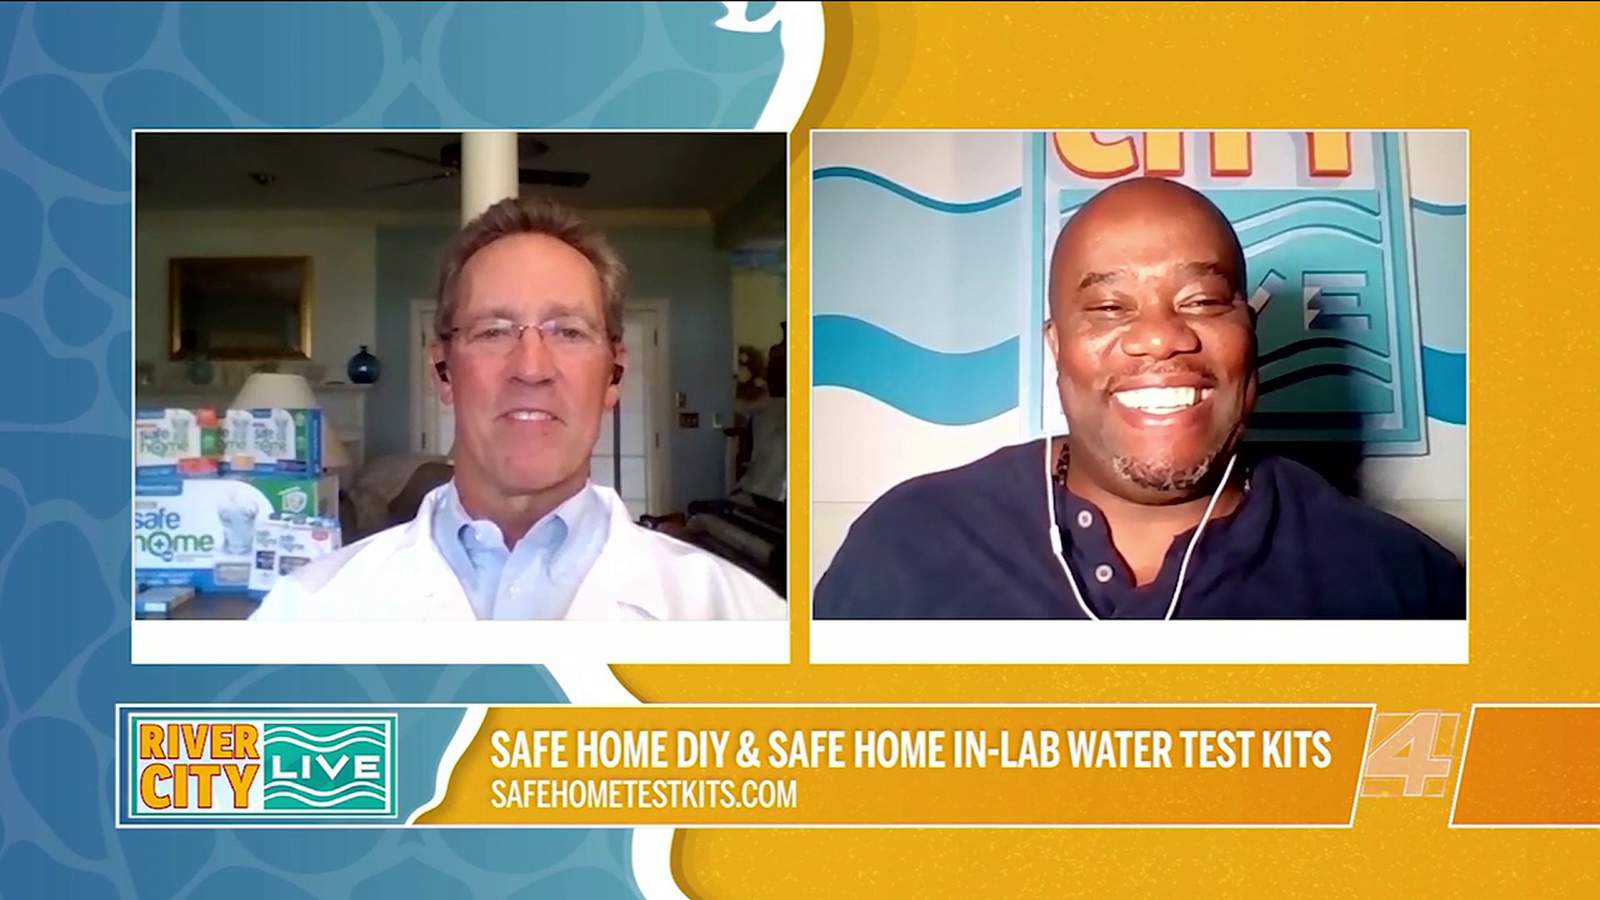 Safe Home DIY & Safe Home In-Lab Water Test Kits | River City Live